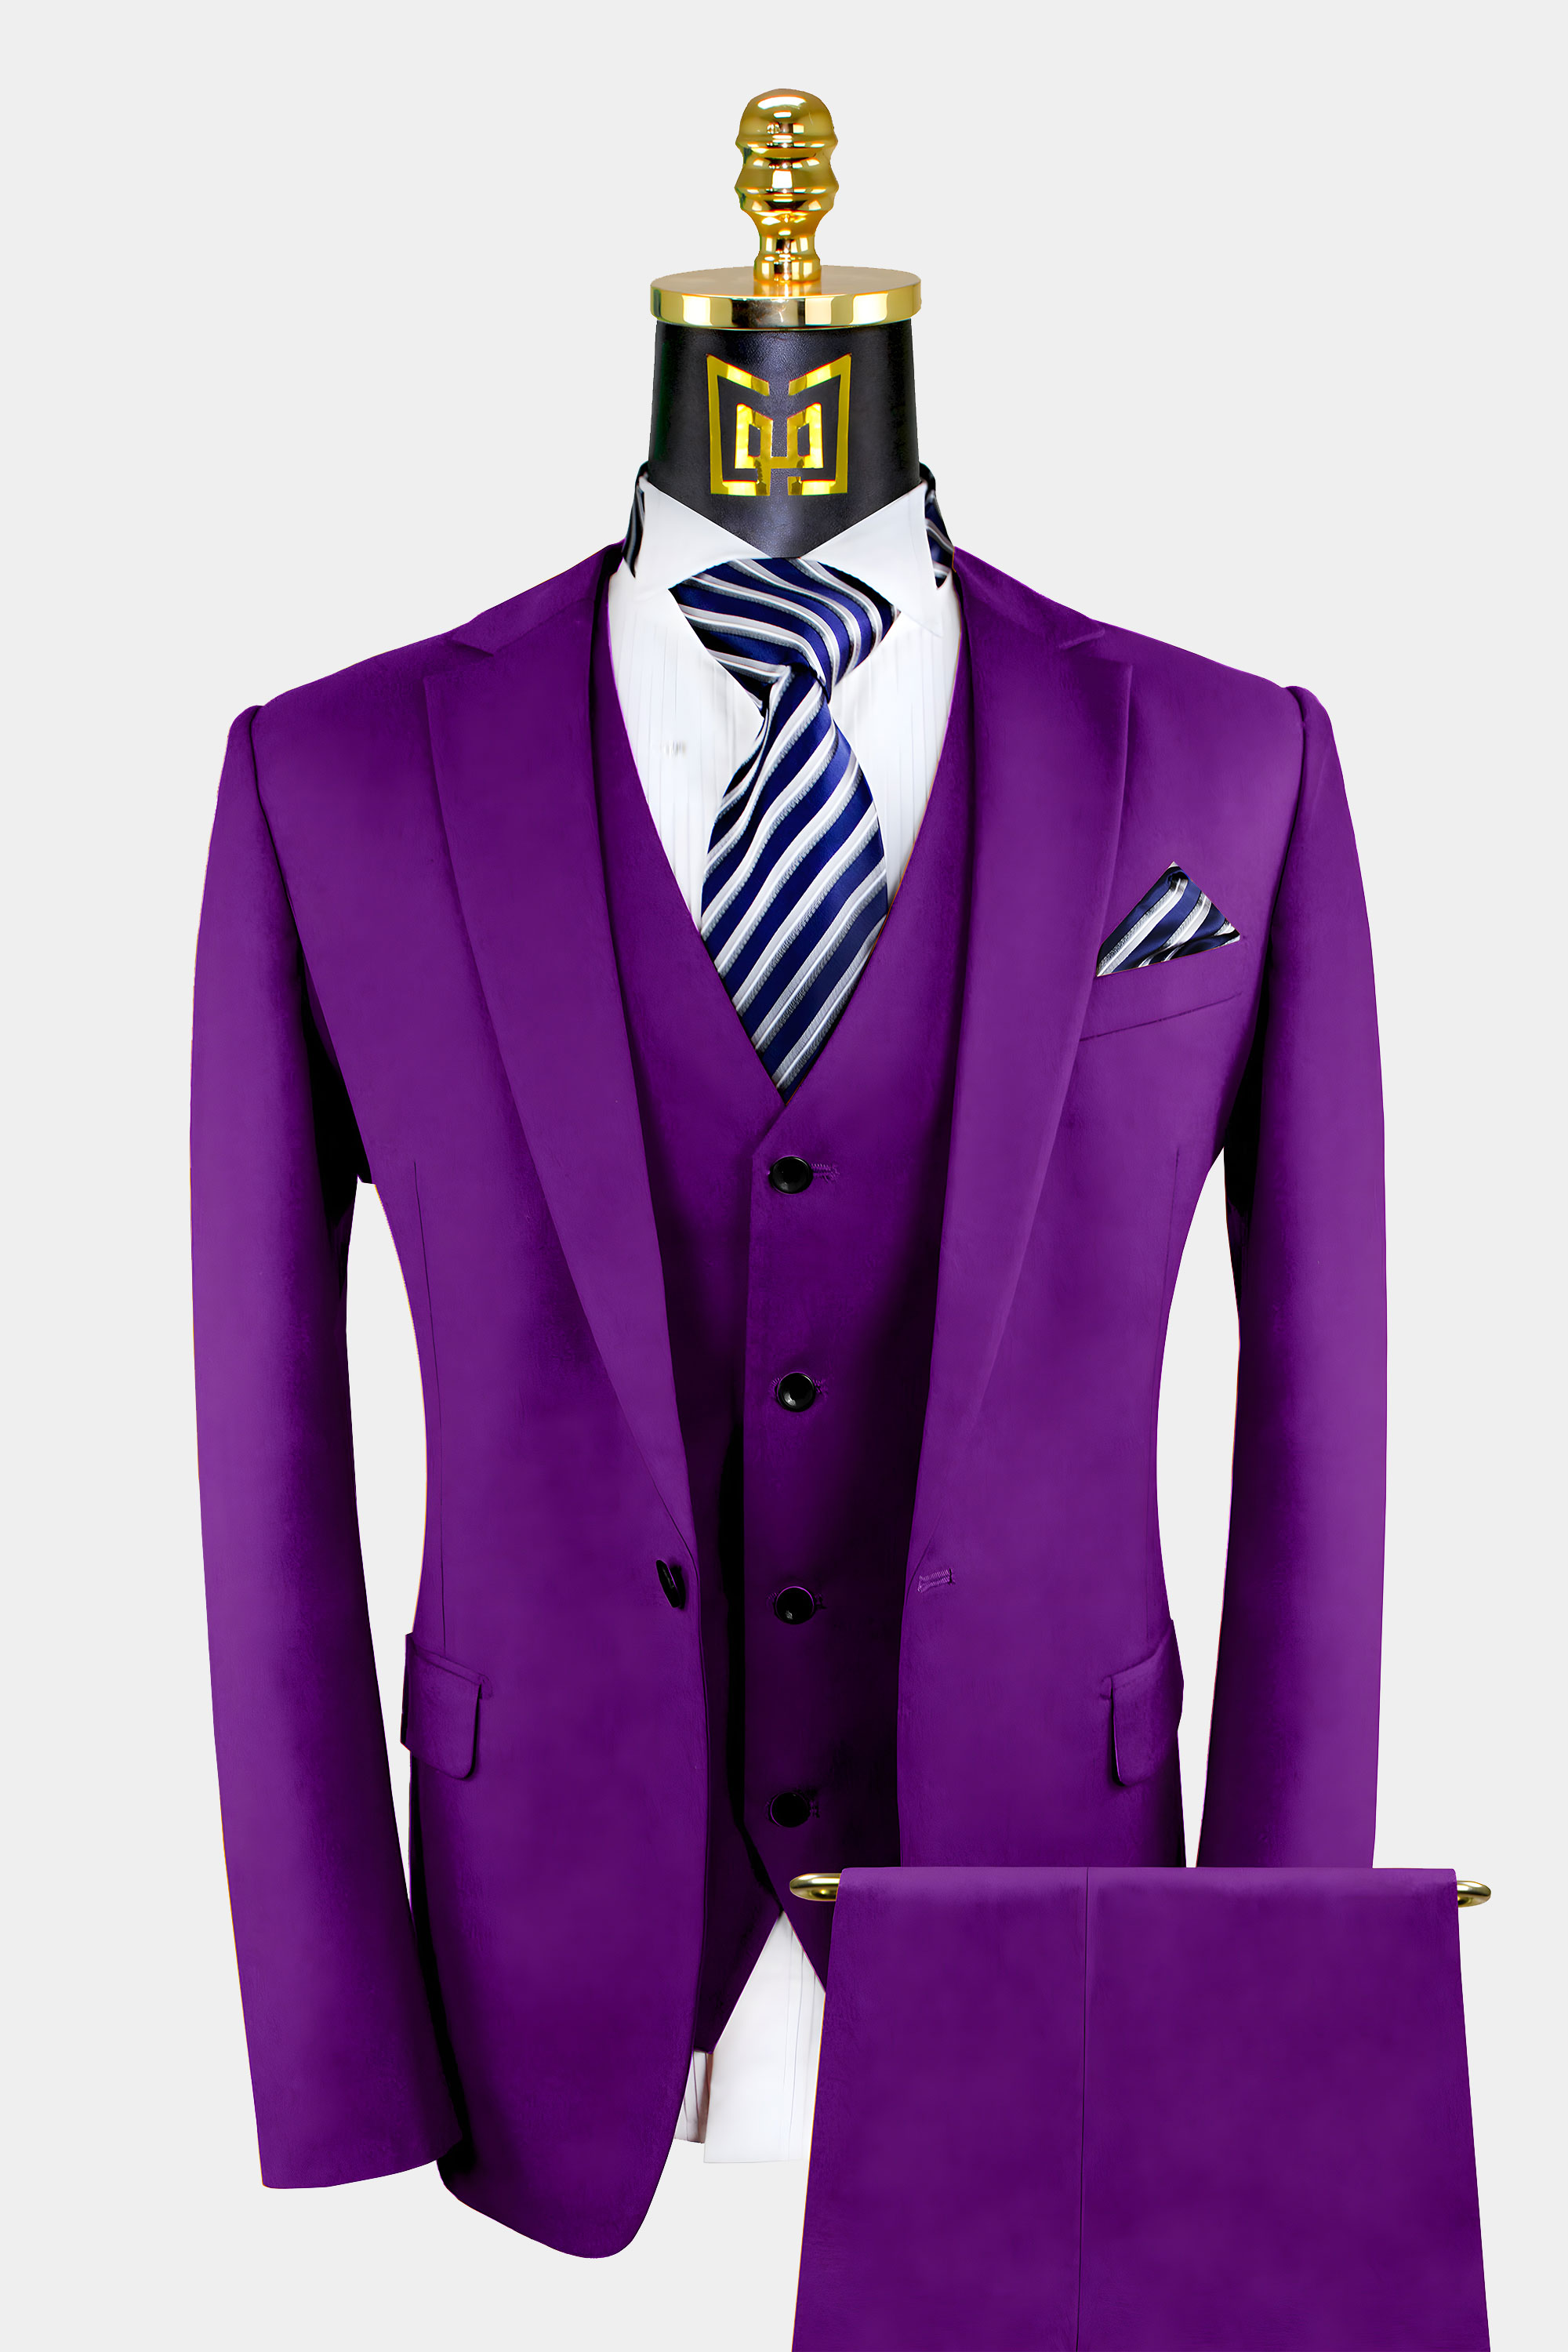 Royal Purple and Gold Tuxedo - 3 Piece - courses.projects.cs.ksu.edu